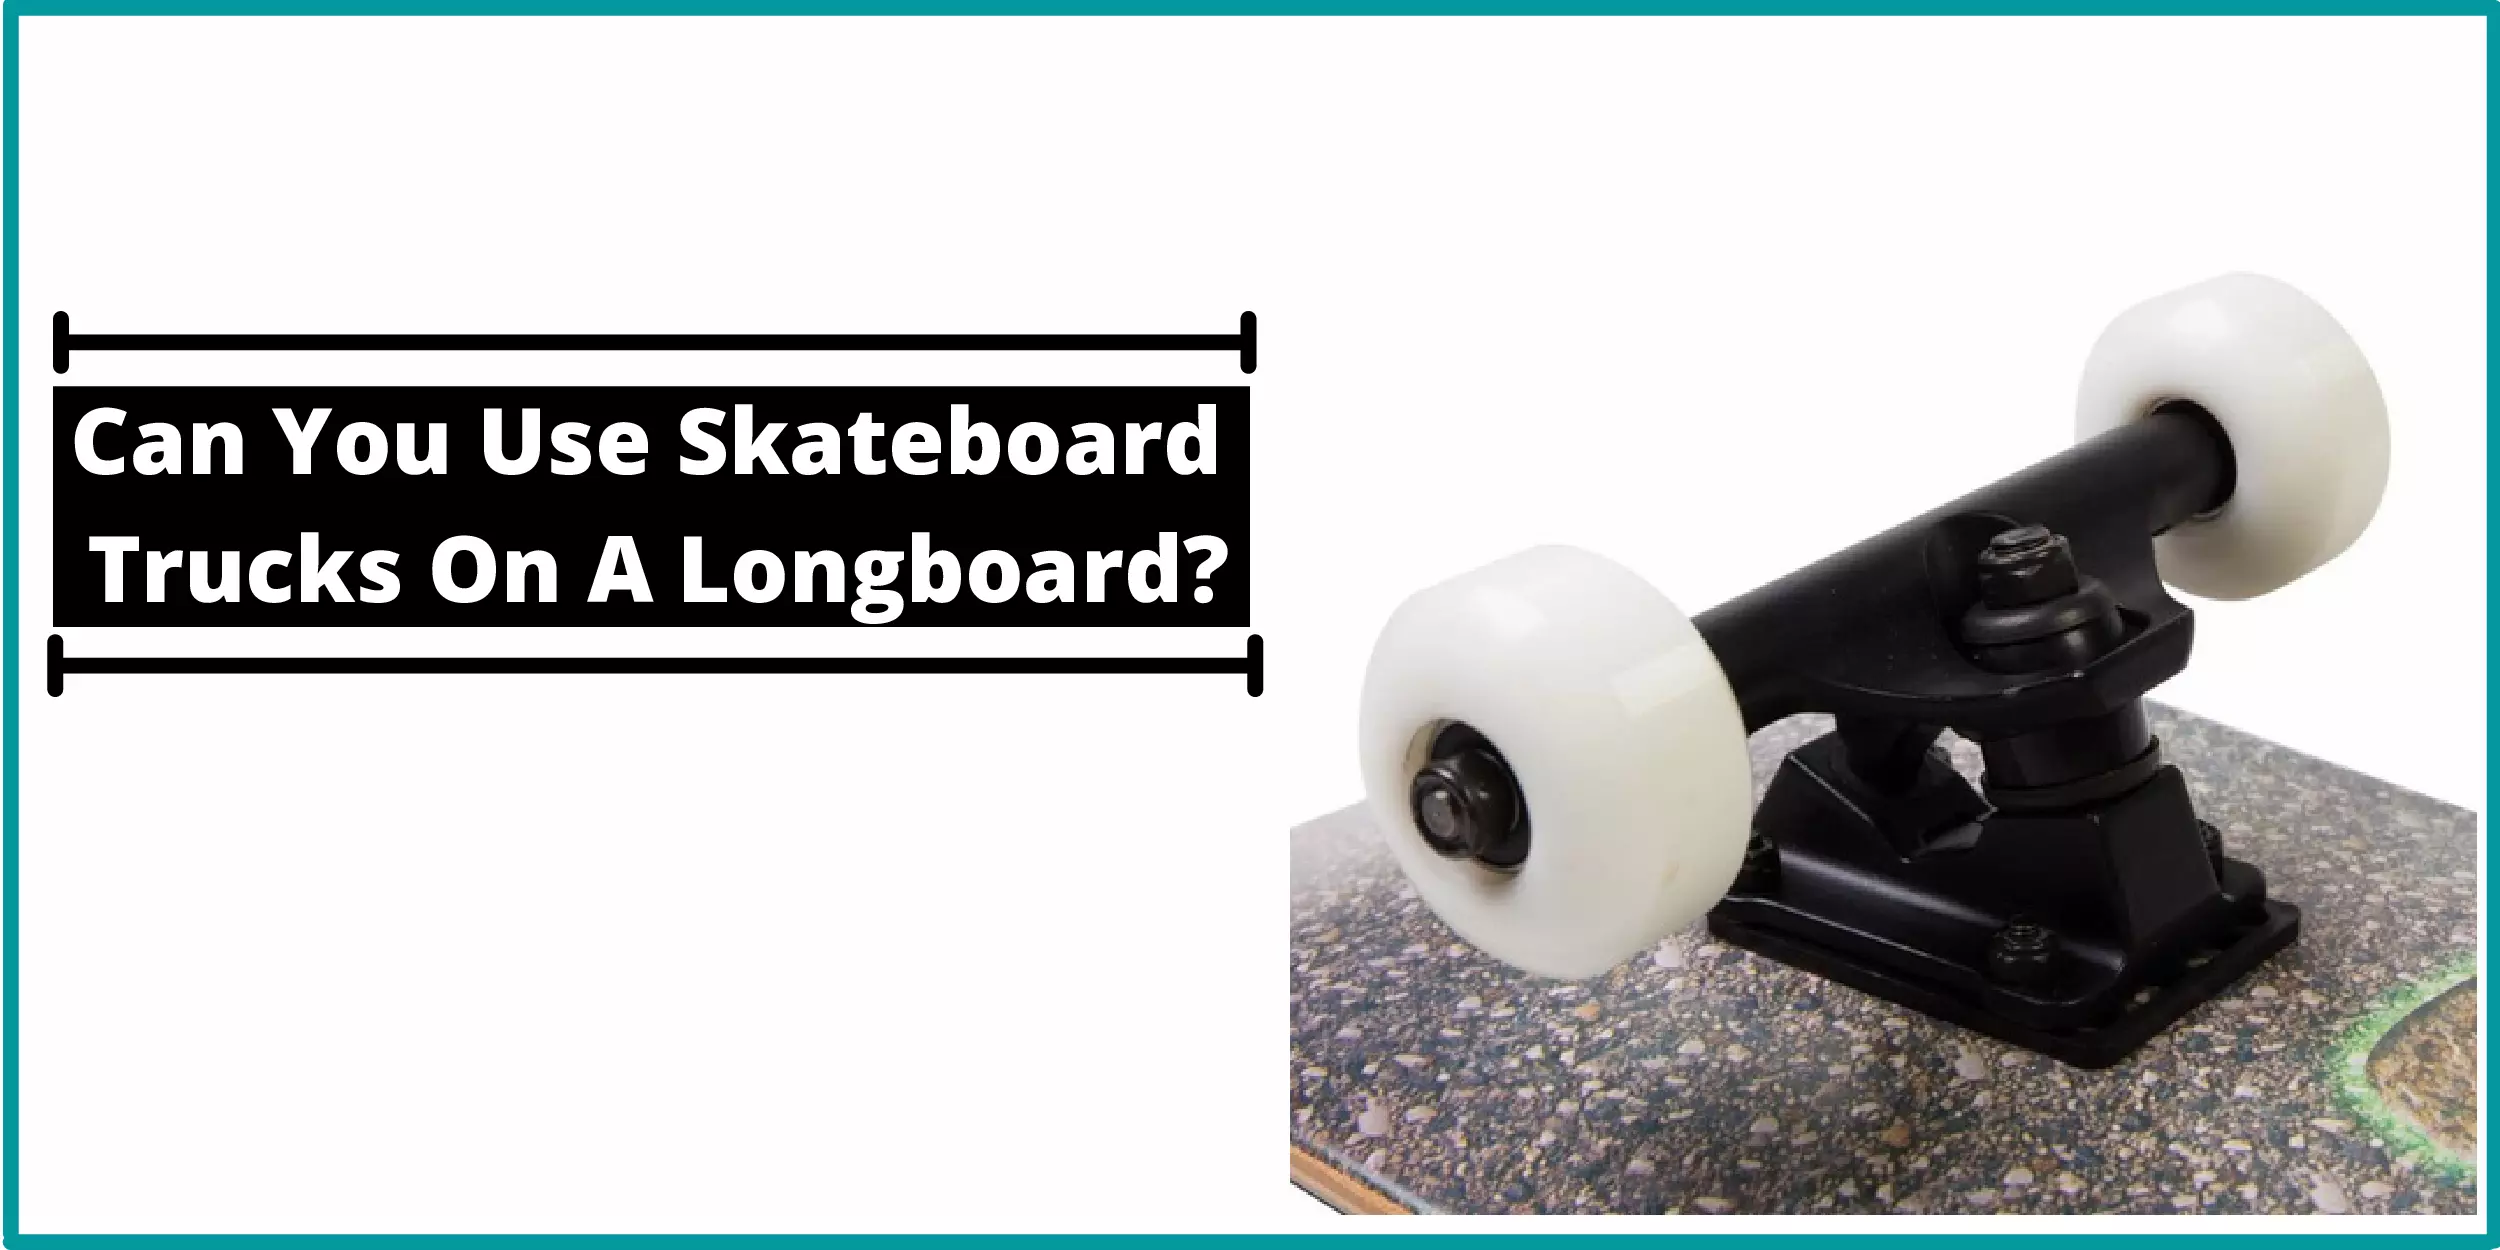 Can You Use Skateboard Trucks On A Longboard?